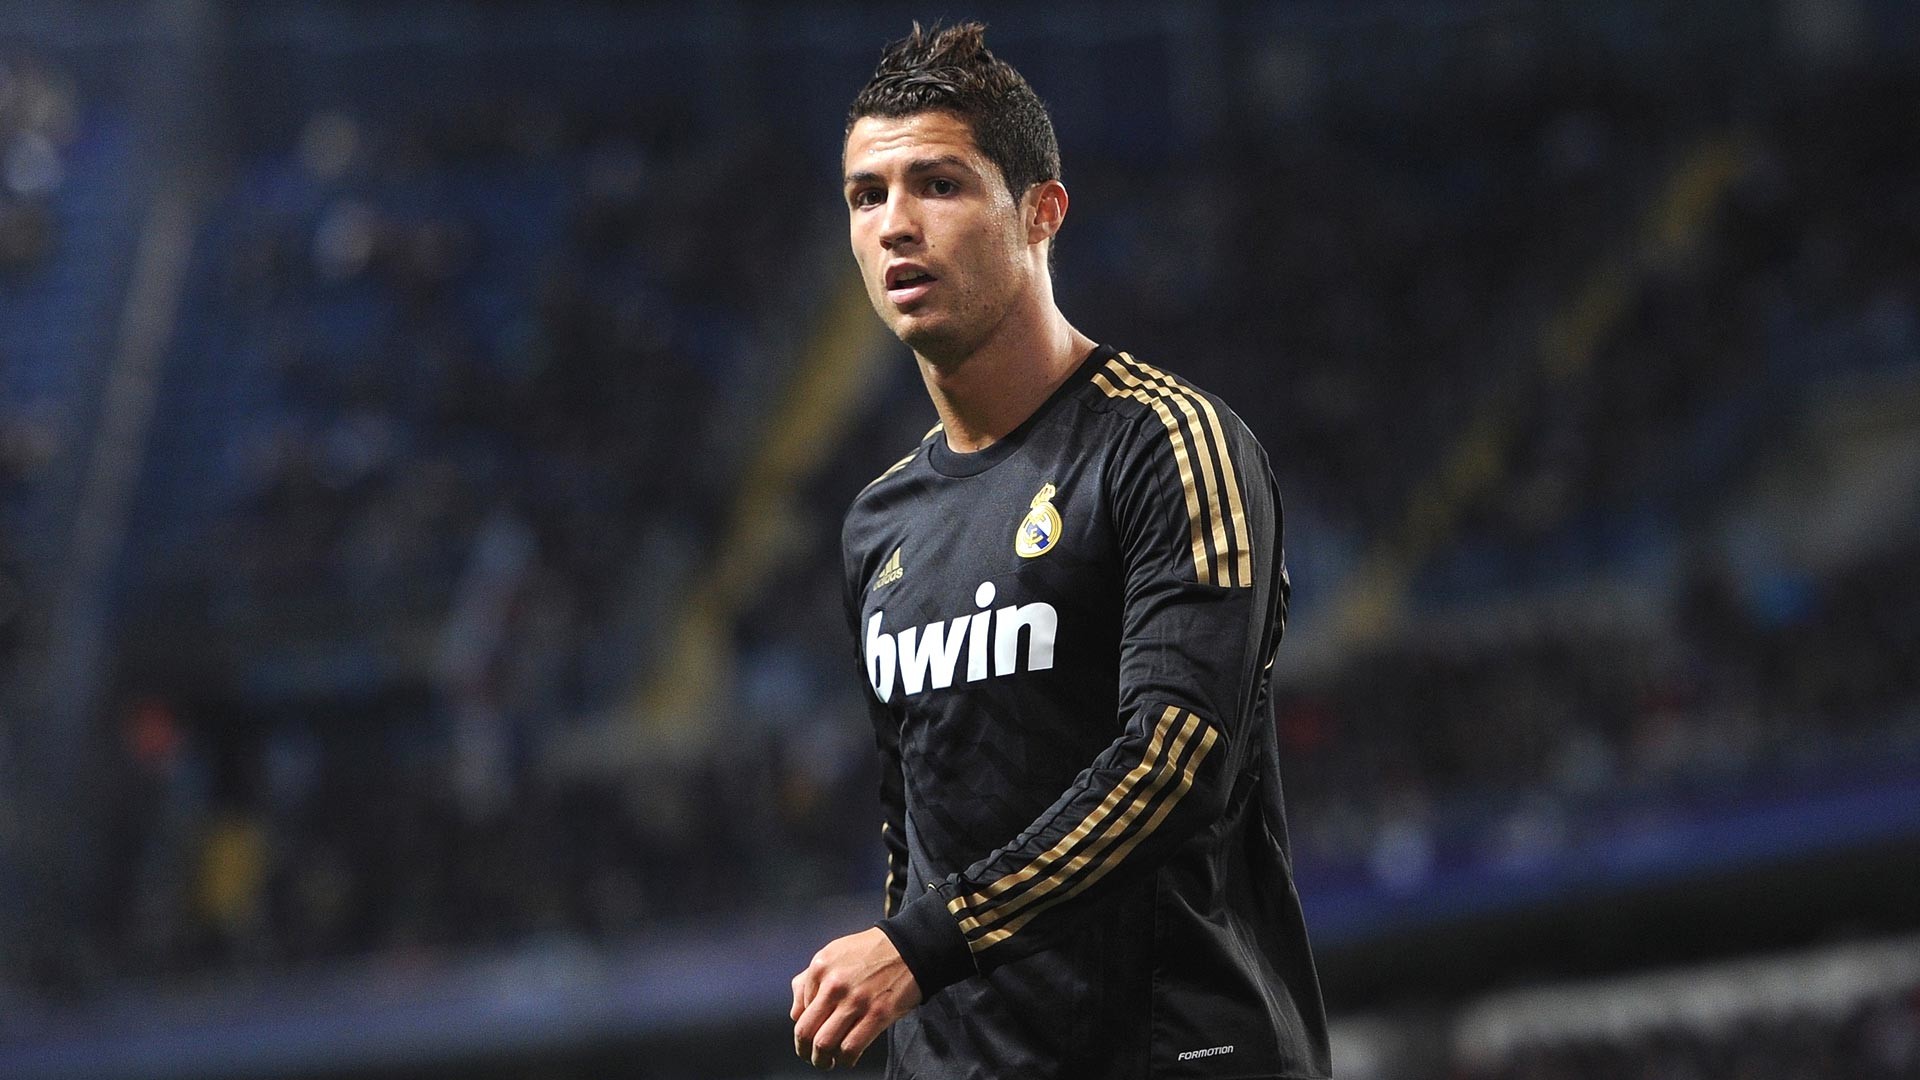 Cristiano Ronaldo Wallpaper 1080p (74+ images)1920 x 1080